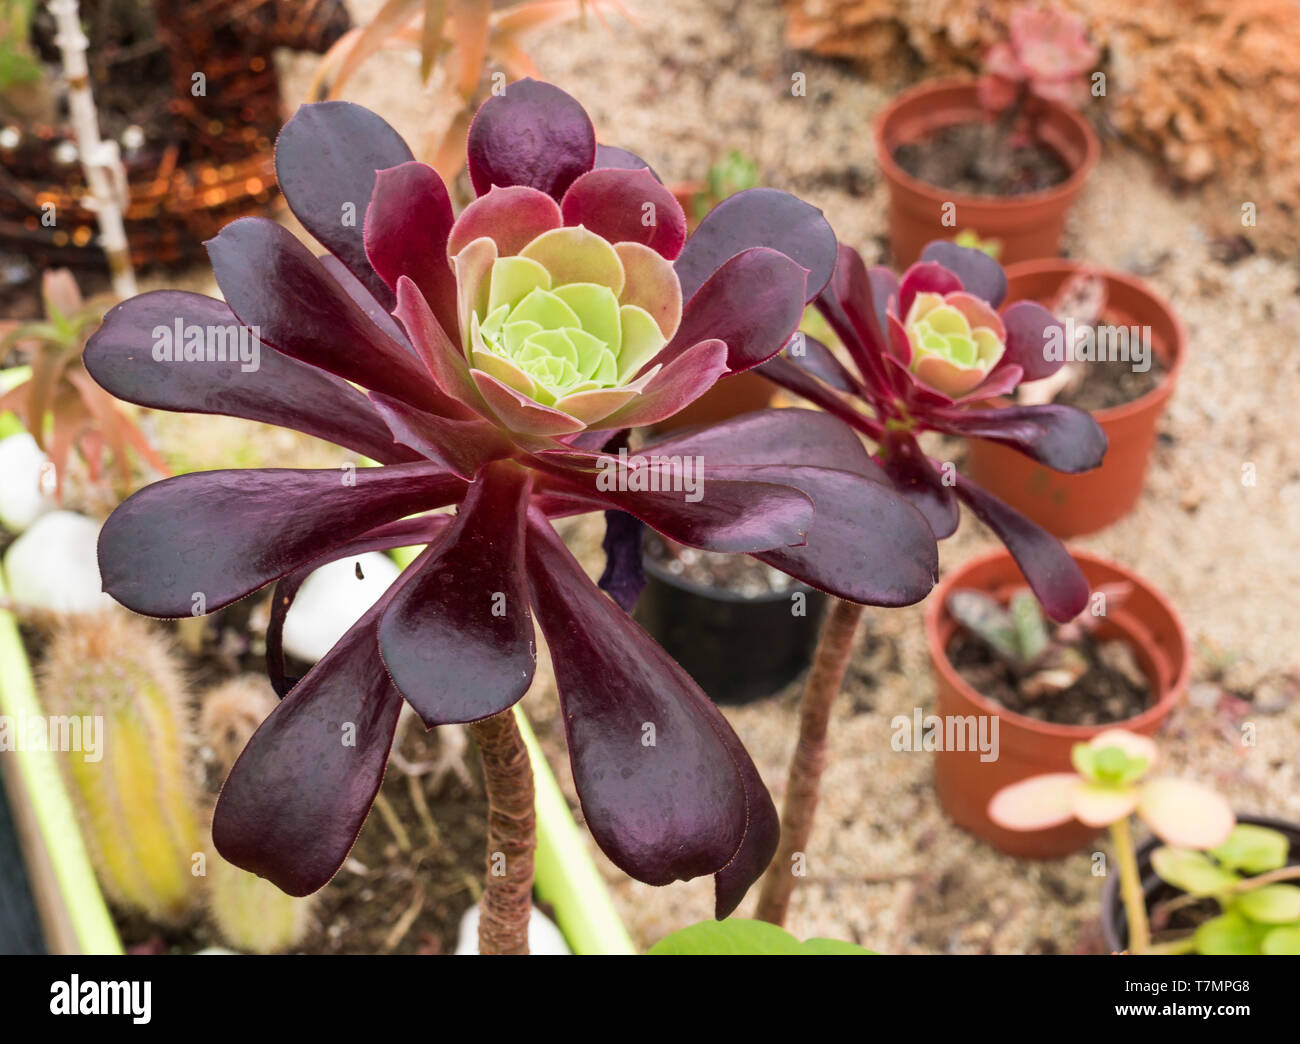 Rosa negra suculenta fotografías e imágenes de alta resolución - Alamy